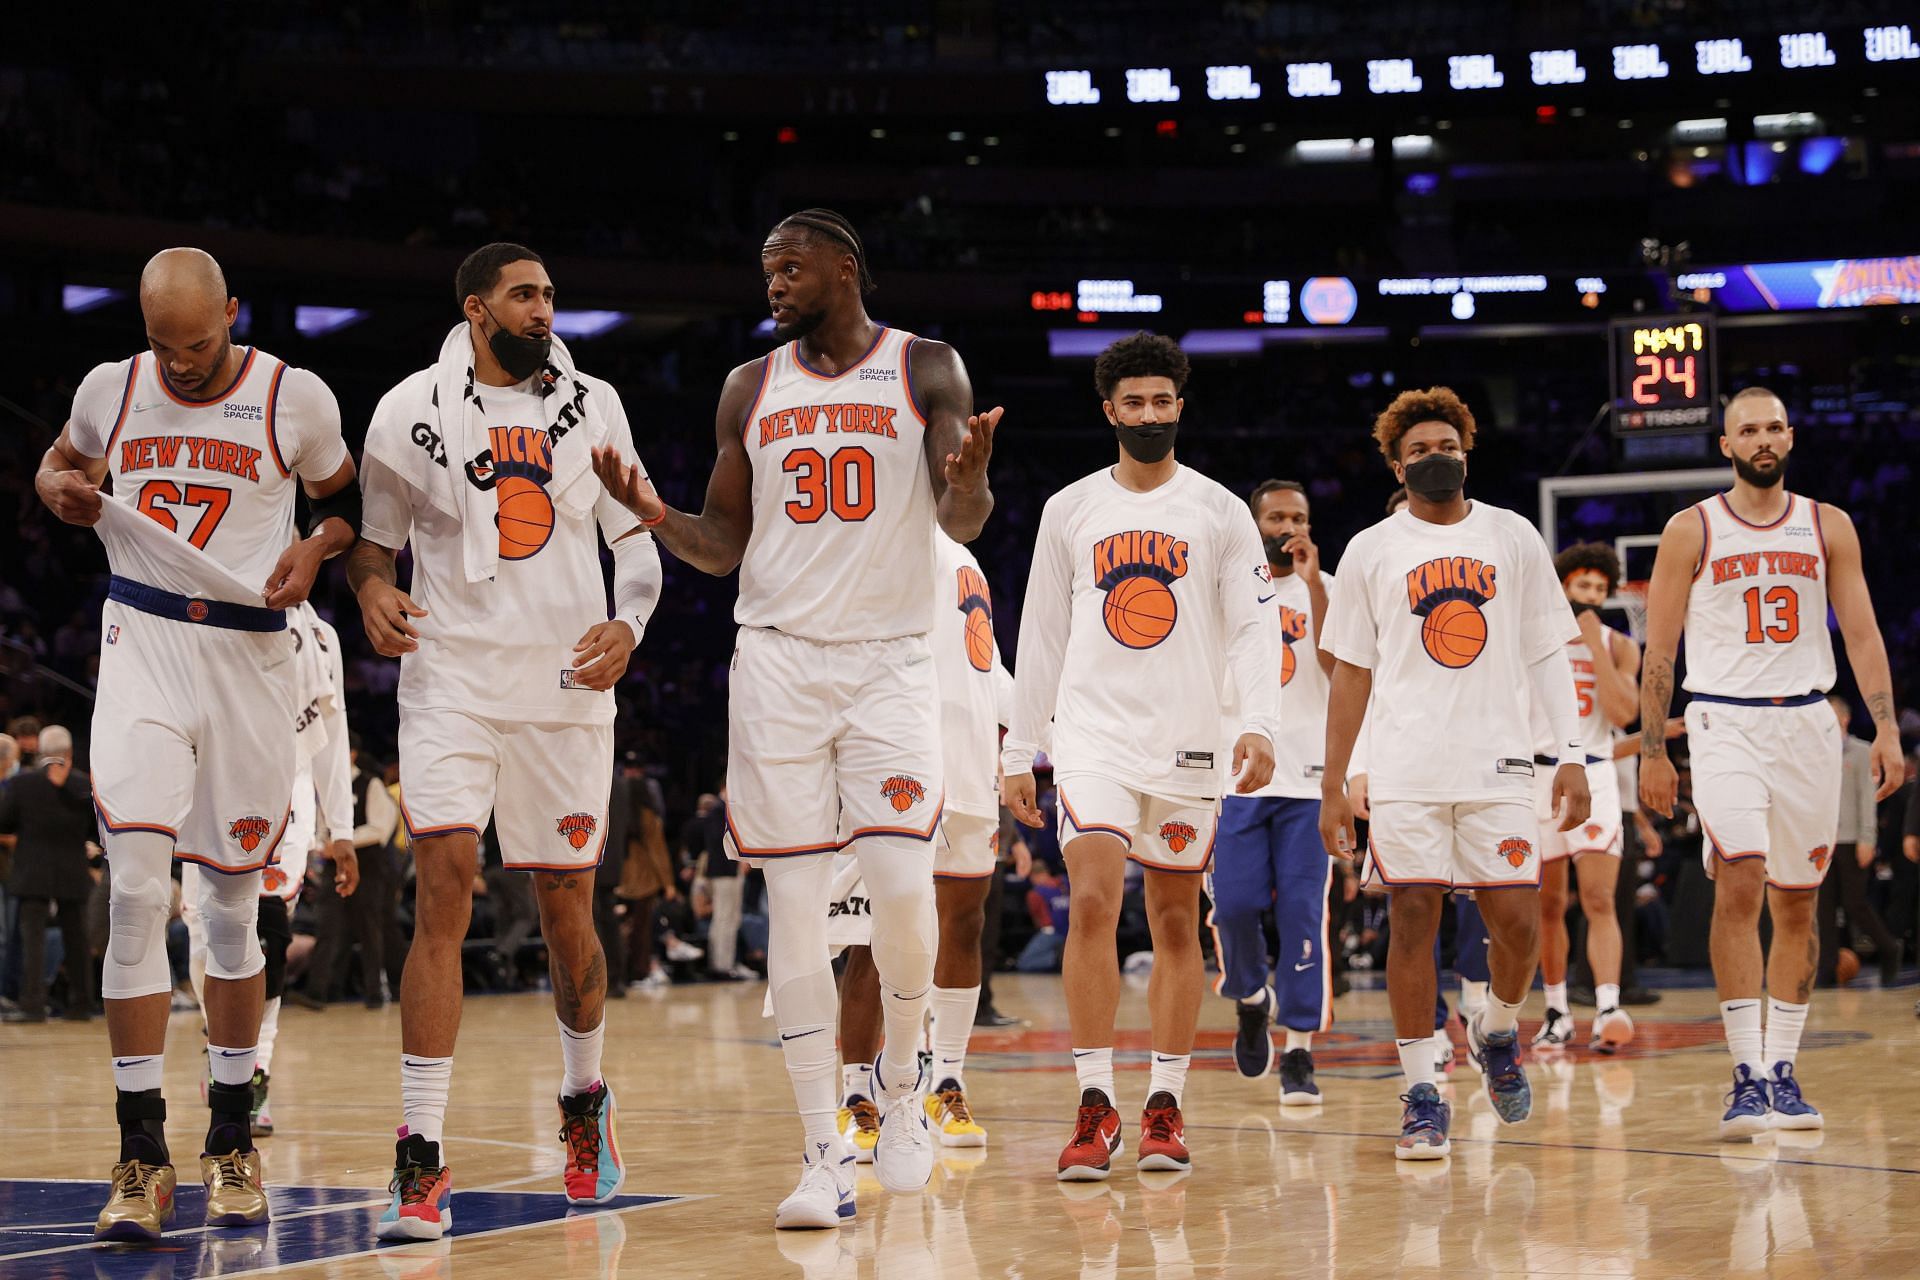 RJ Barrett New York Knicks Game-Used #9 Blue Jersey vs. Washington